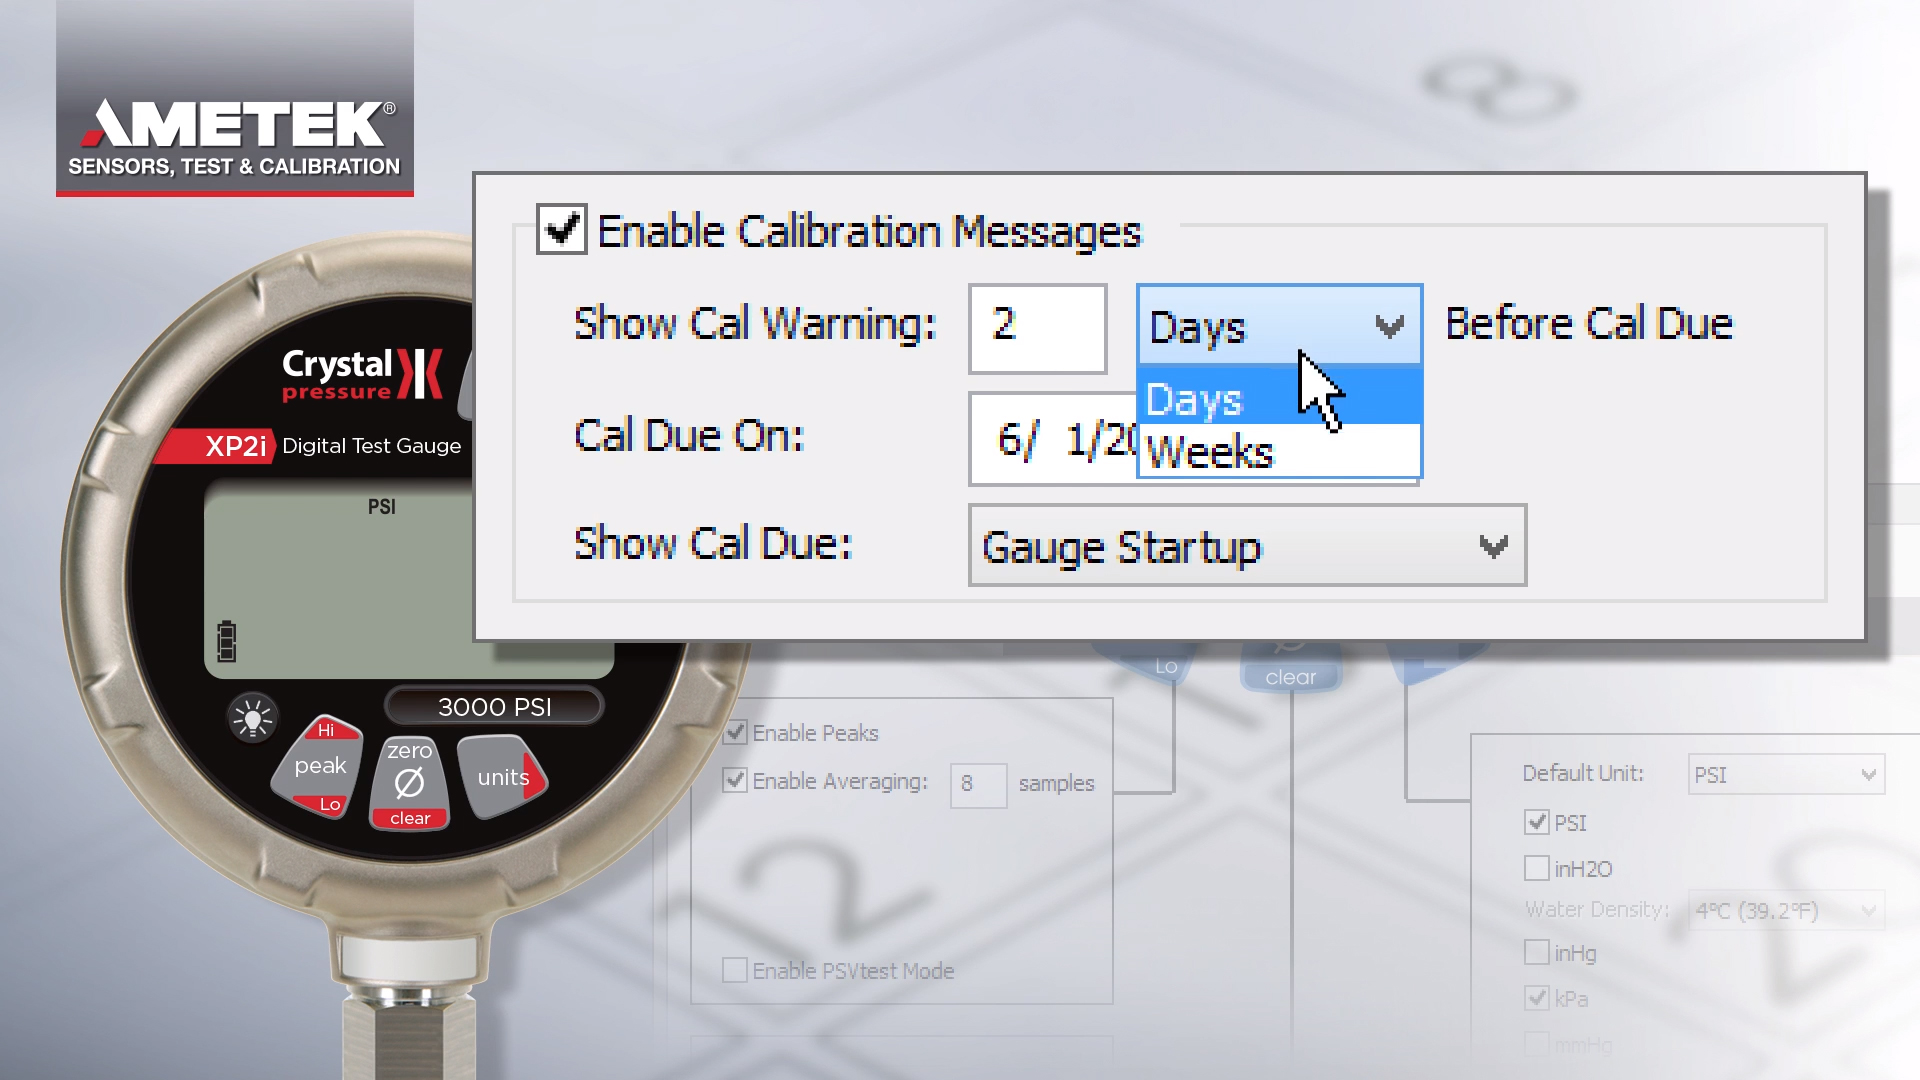 Ametek Crystal XP2i Digital Absolute Pressure Gauge calibration - enable calibration messages screen.